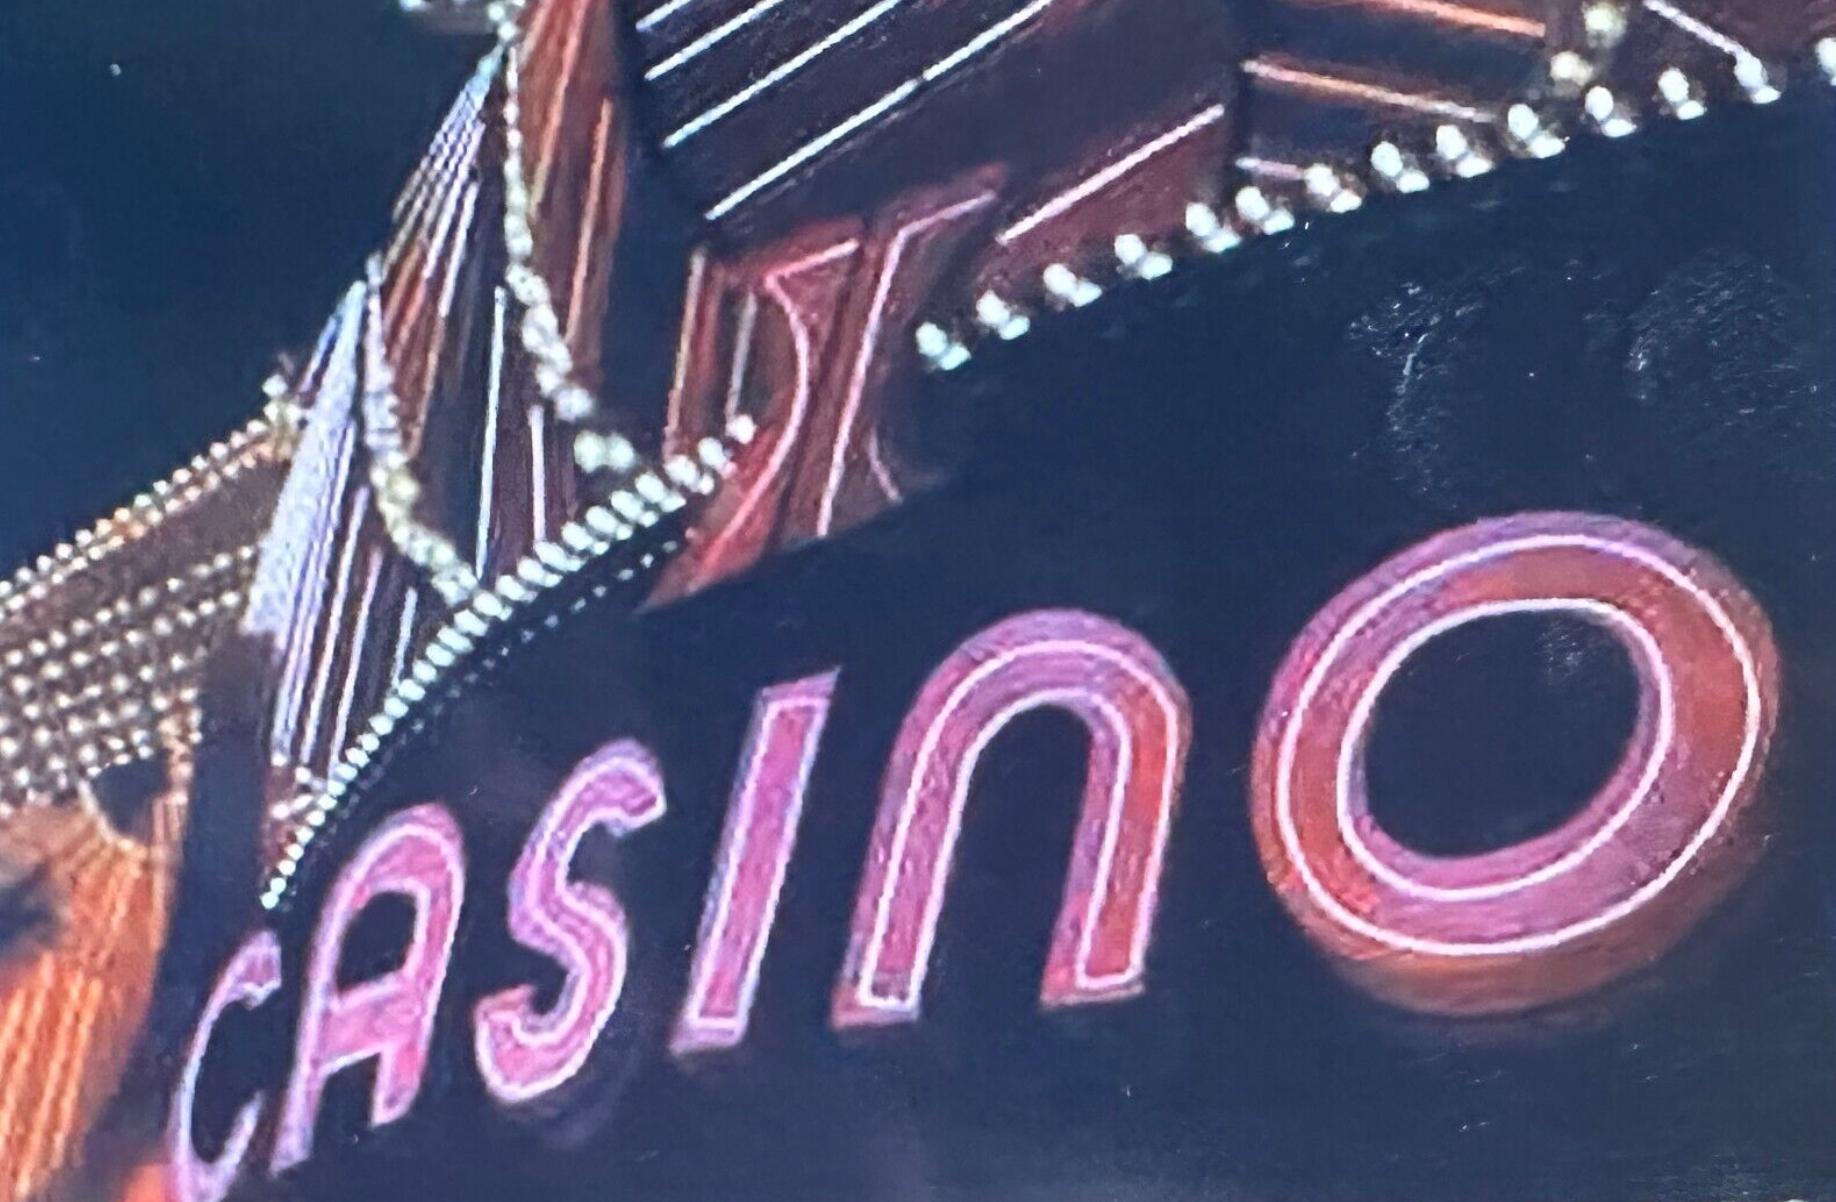 Casino - Original Oil Painting by Renowned Photorealist Mark Schiff